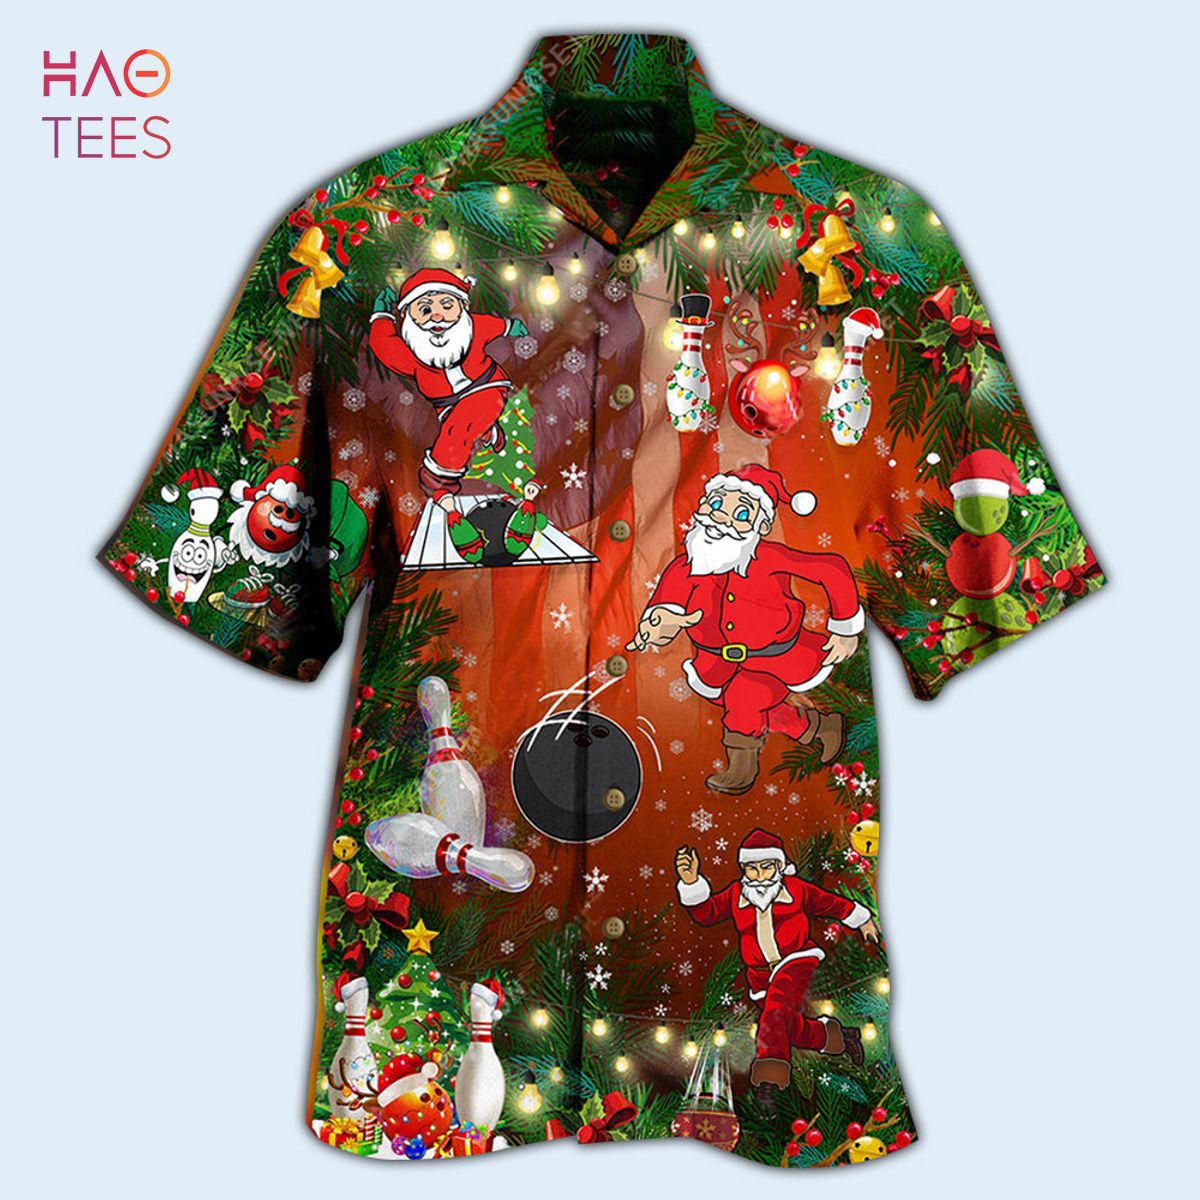 Bowling Do You Wanna Solo Bowling With Santa Claus Limited Hawaiian Shirt